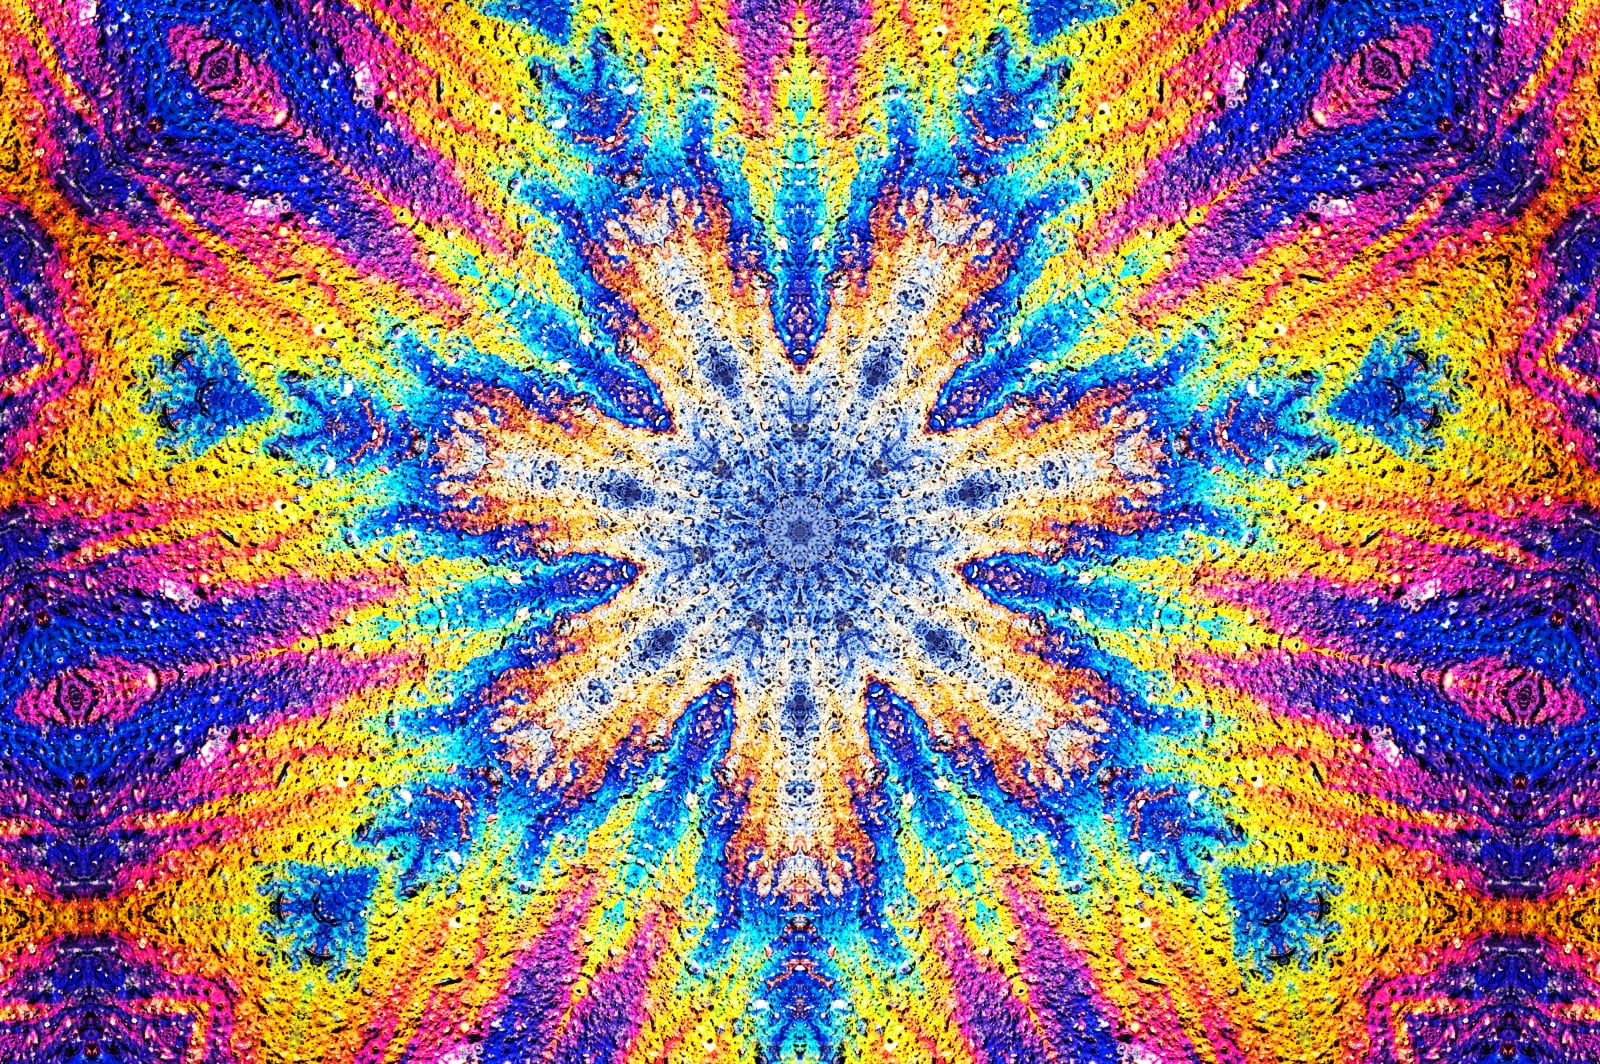 illustration of multicolored kaleidoscope